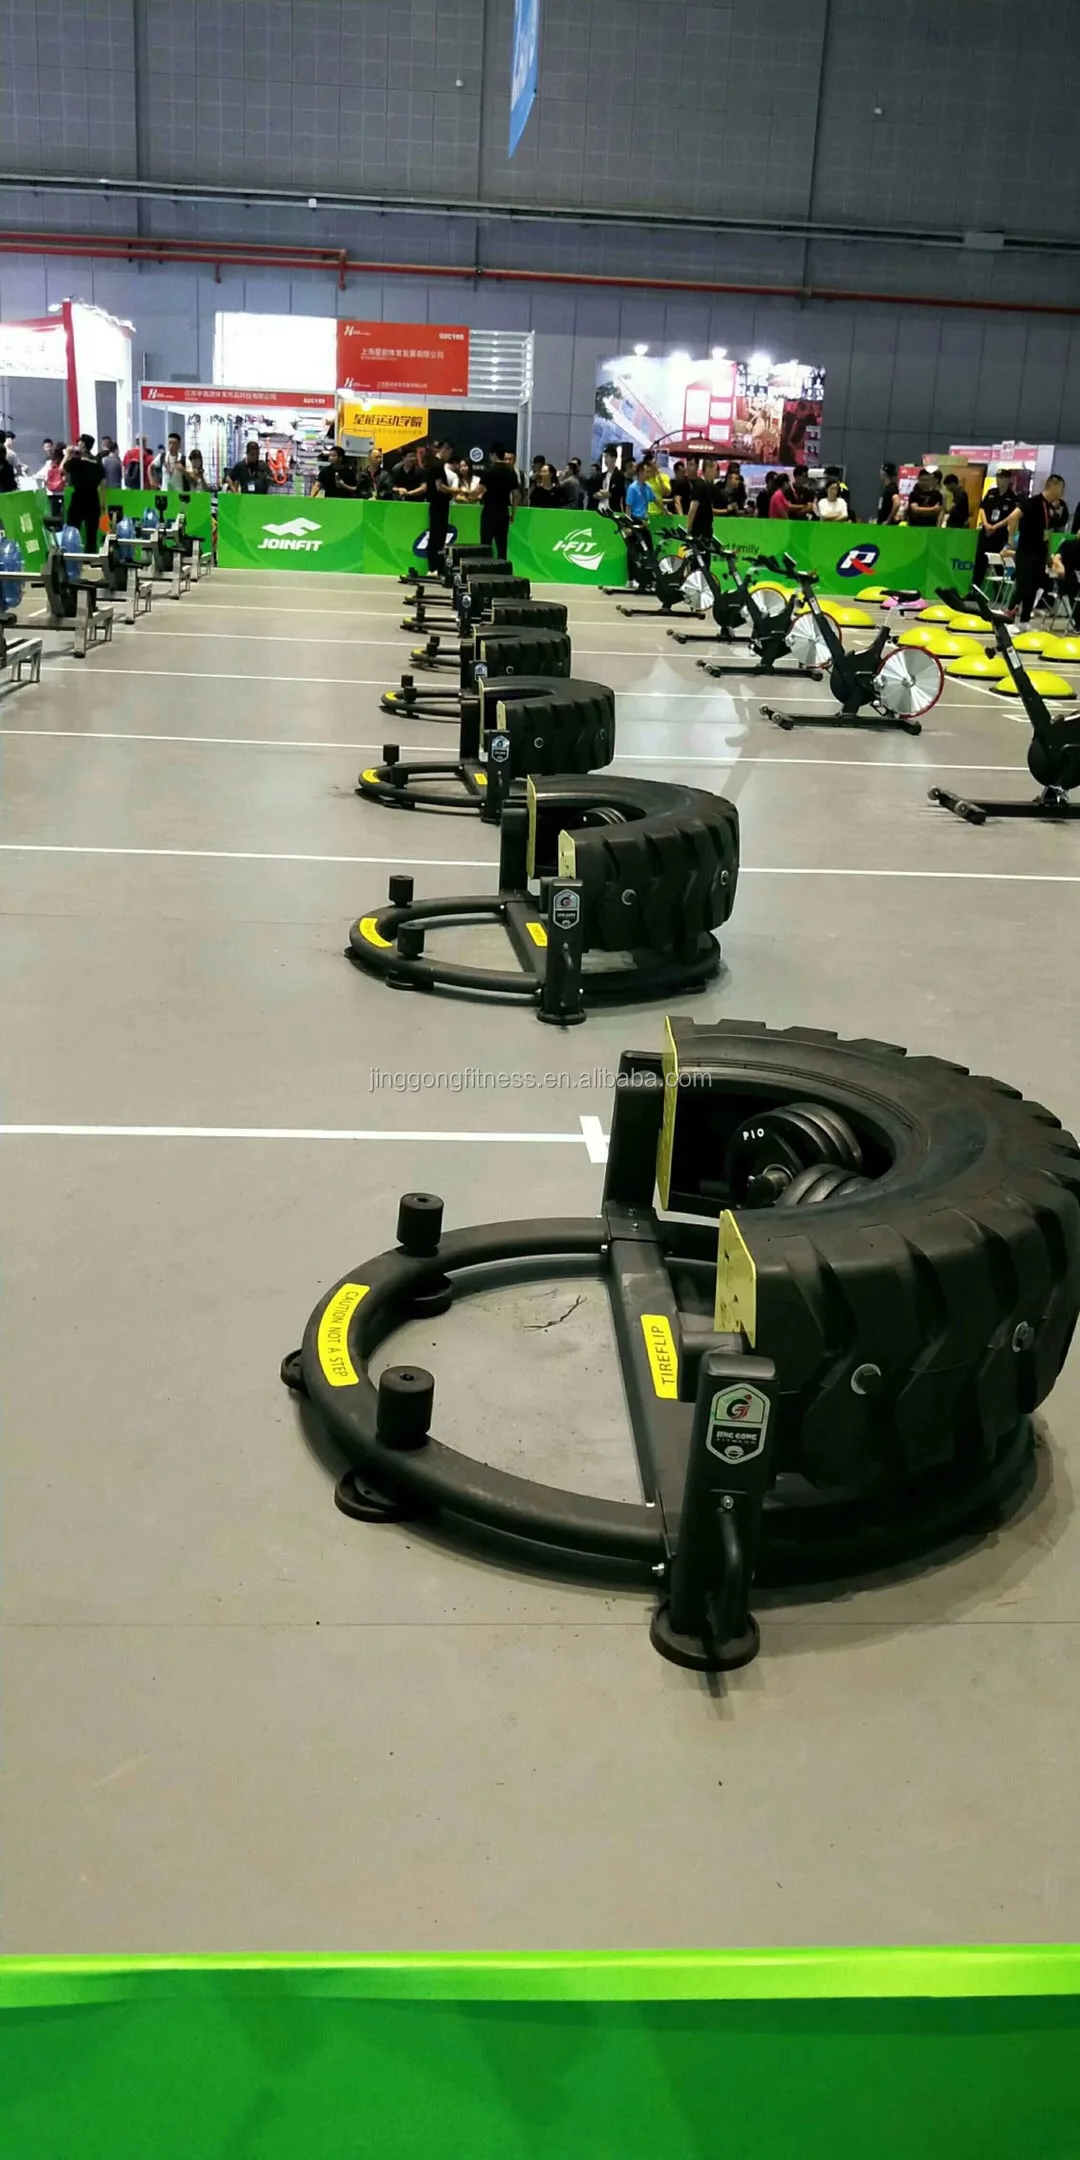 2018 Wholesale Sport Equipment Gym Tire Flipping Machine - Buy Sport Equipment Gym,Tire Flipping ...